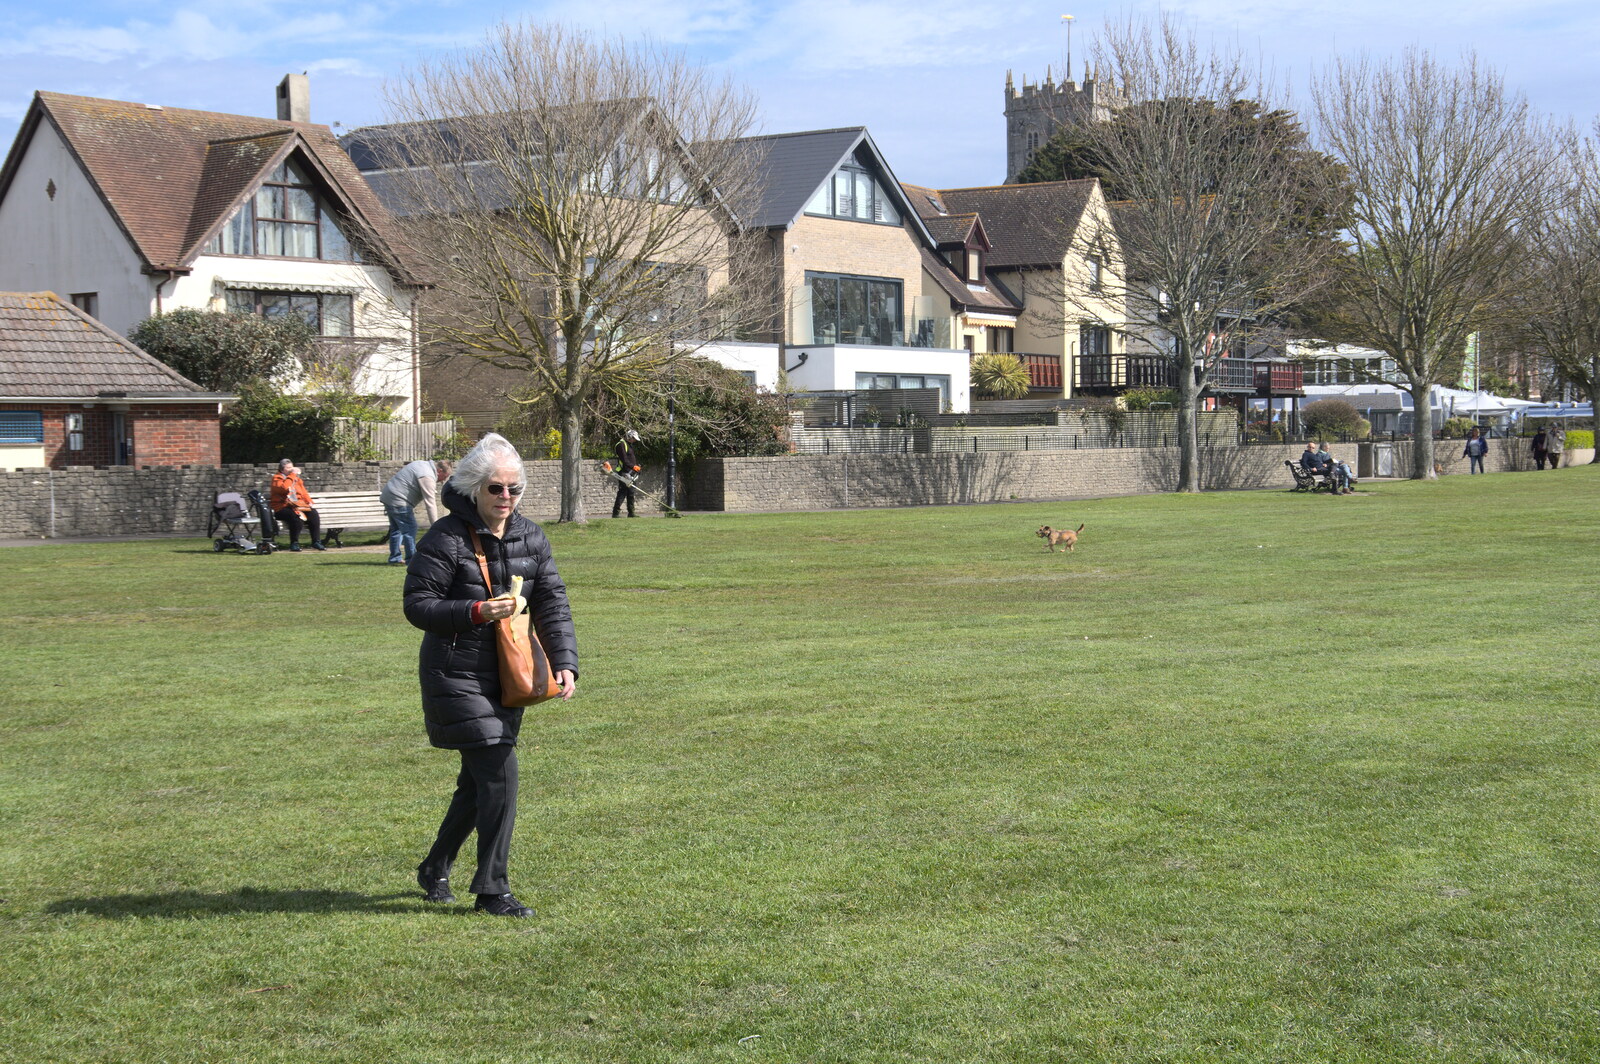 Bernice's Birthday and Walks Around New Milton and Lymington, Hampshire - 10th April 2022: Bernice roams around the park at Christchurch